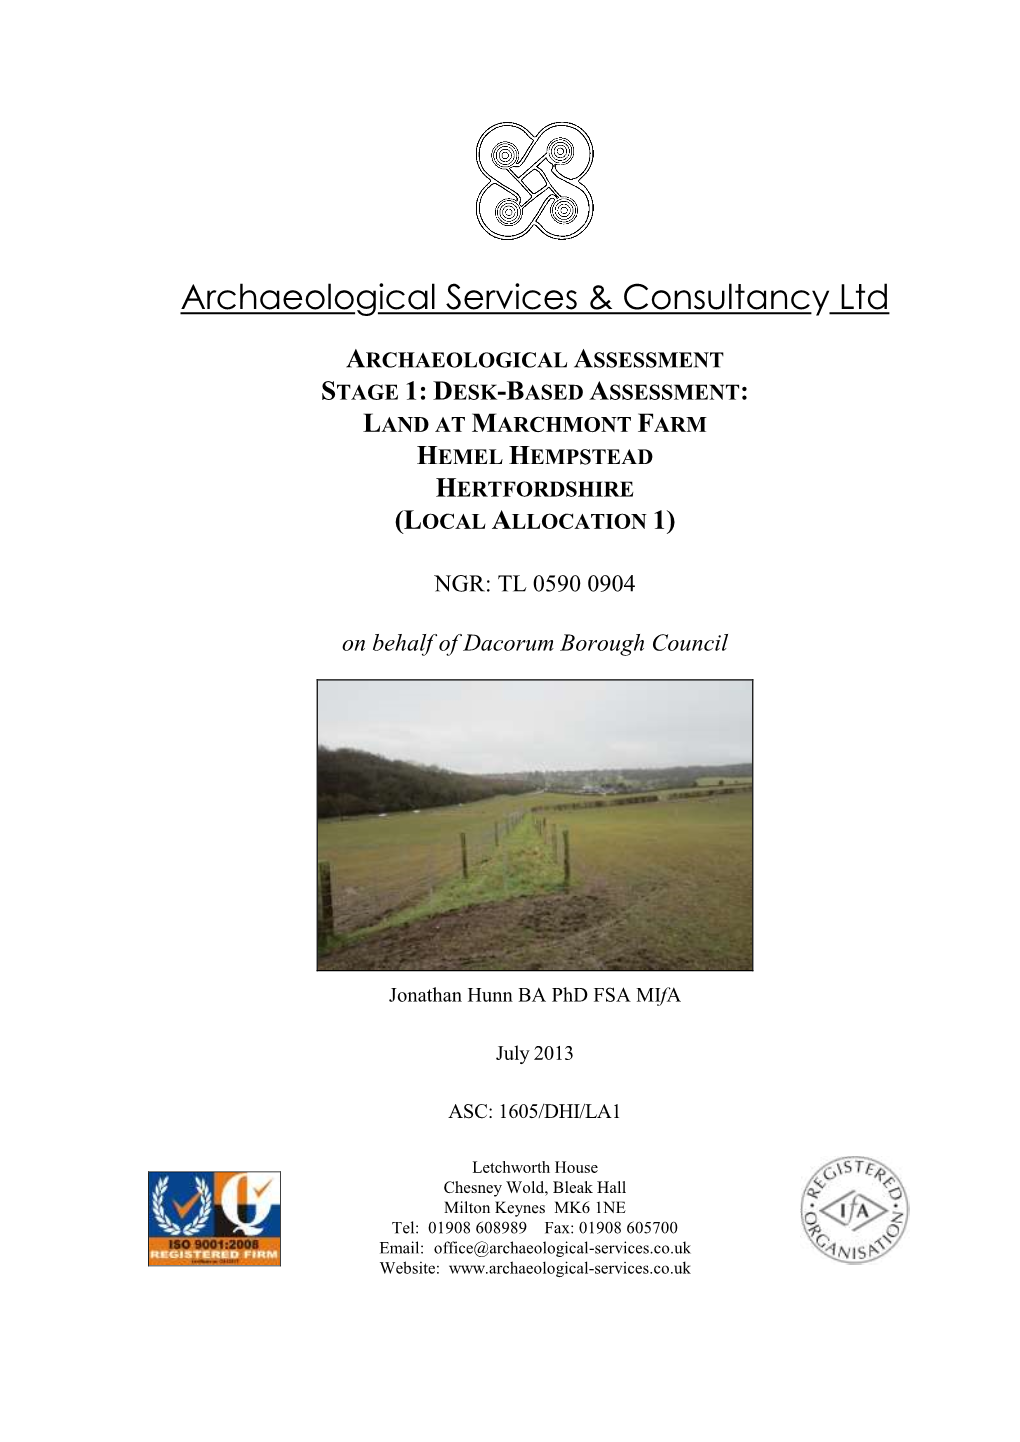 Archaeological Desk-Based Assessments (IFA 2011)